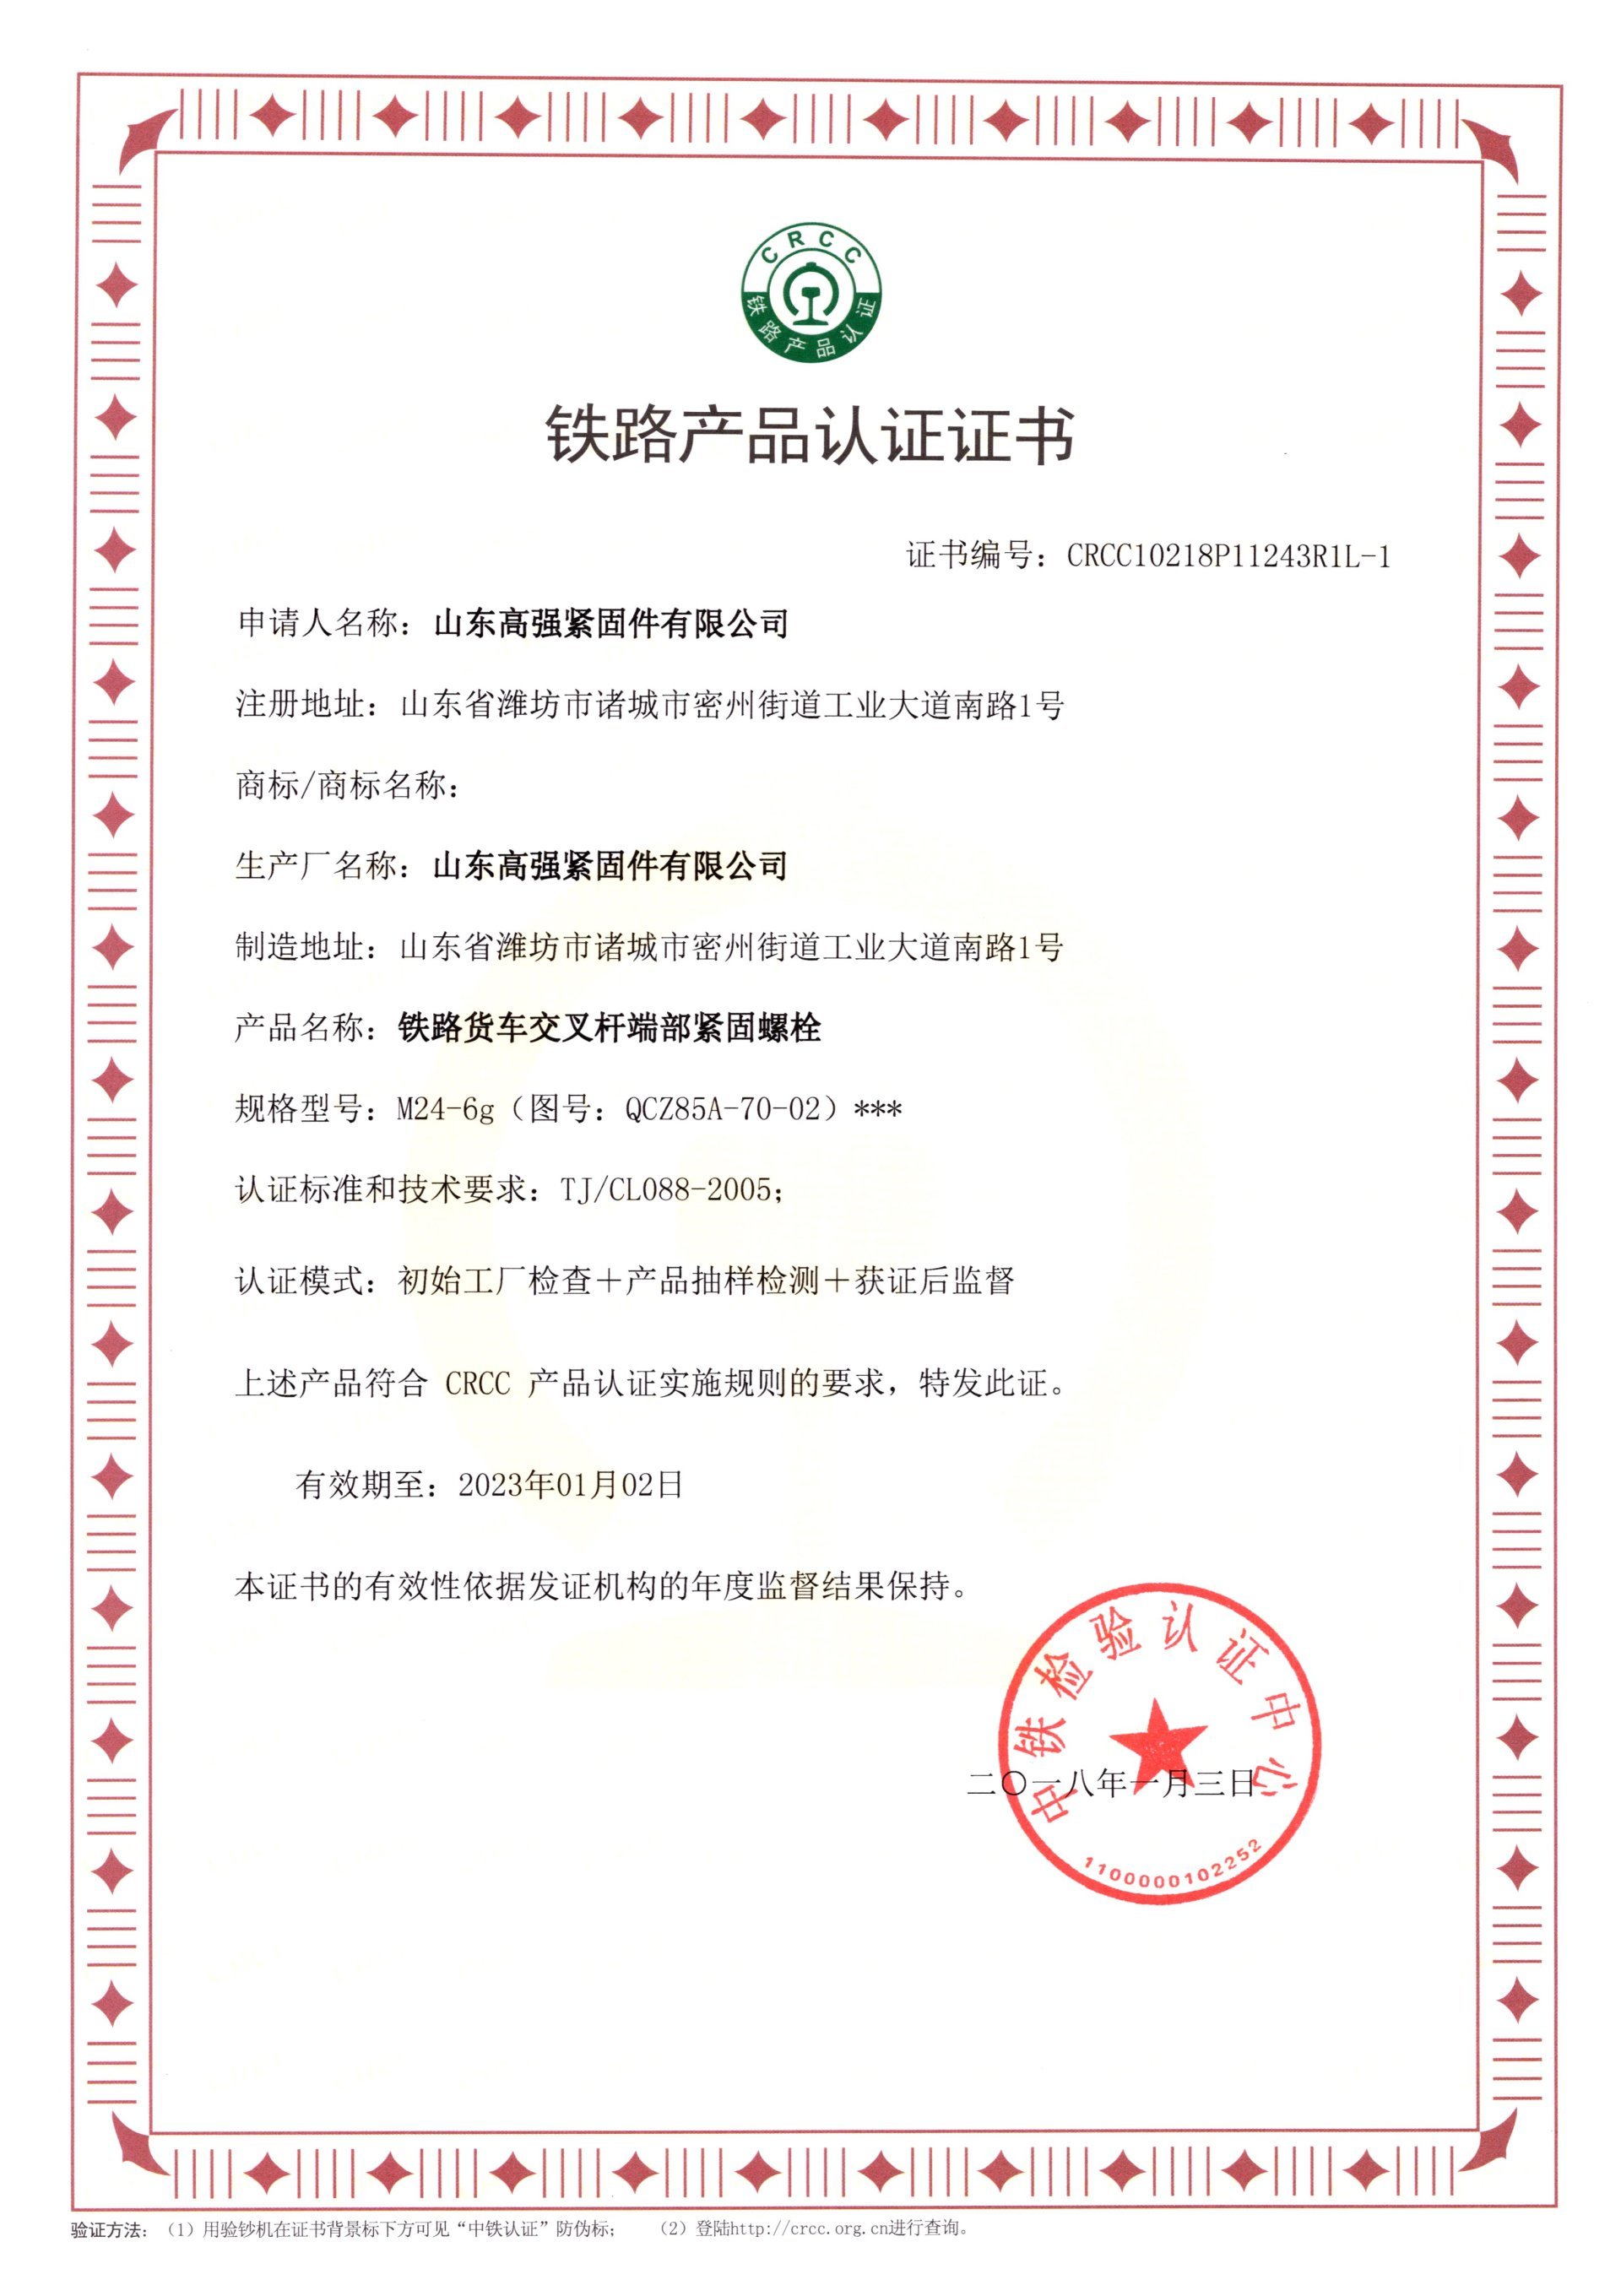 CRCC Railway Certification